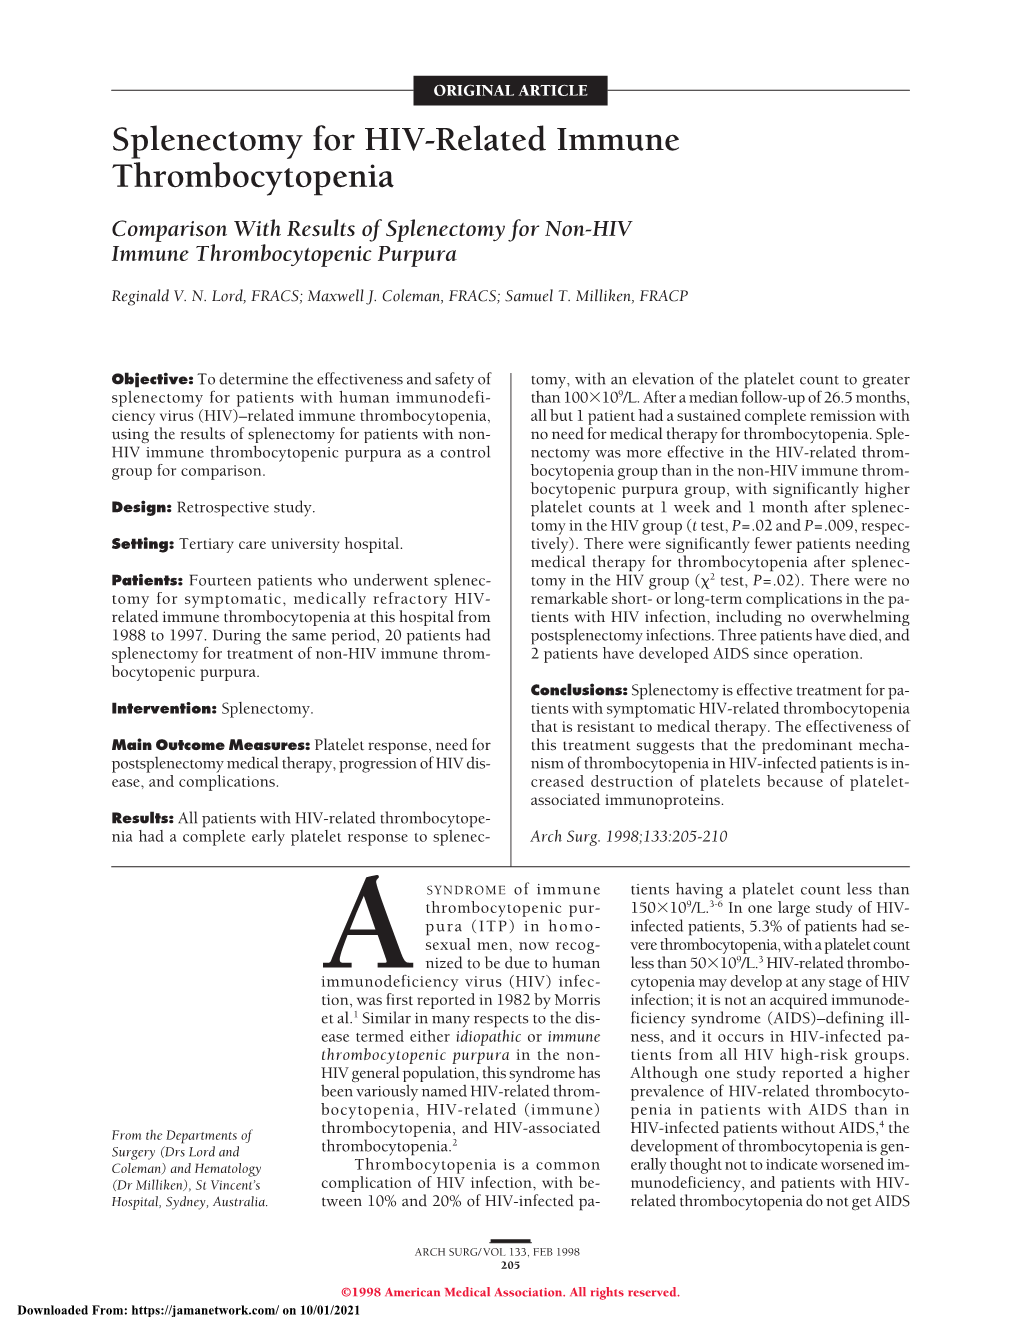 Splenectomy for HIV-Related Immune Thrombocytopenia Comparison with Results of Splenectomy for Non-HIV Immune Thrombocytopenic Purpura